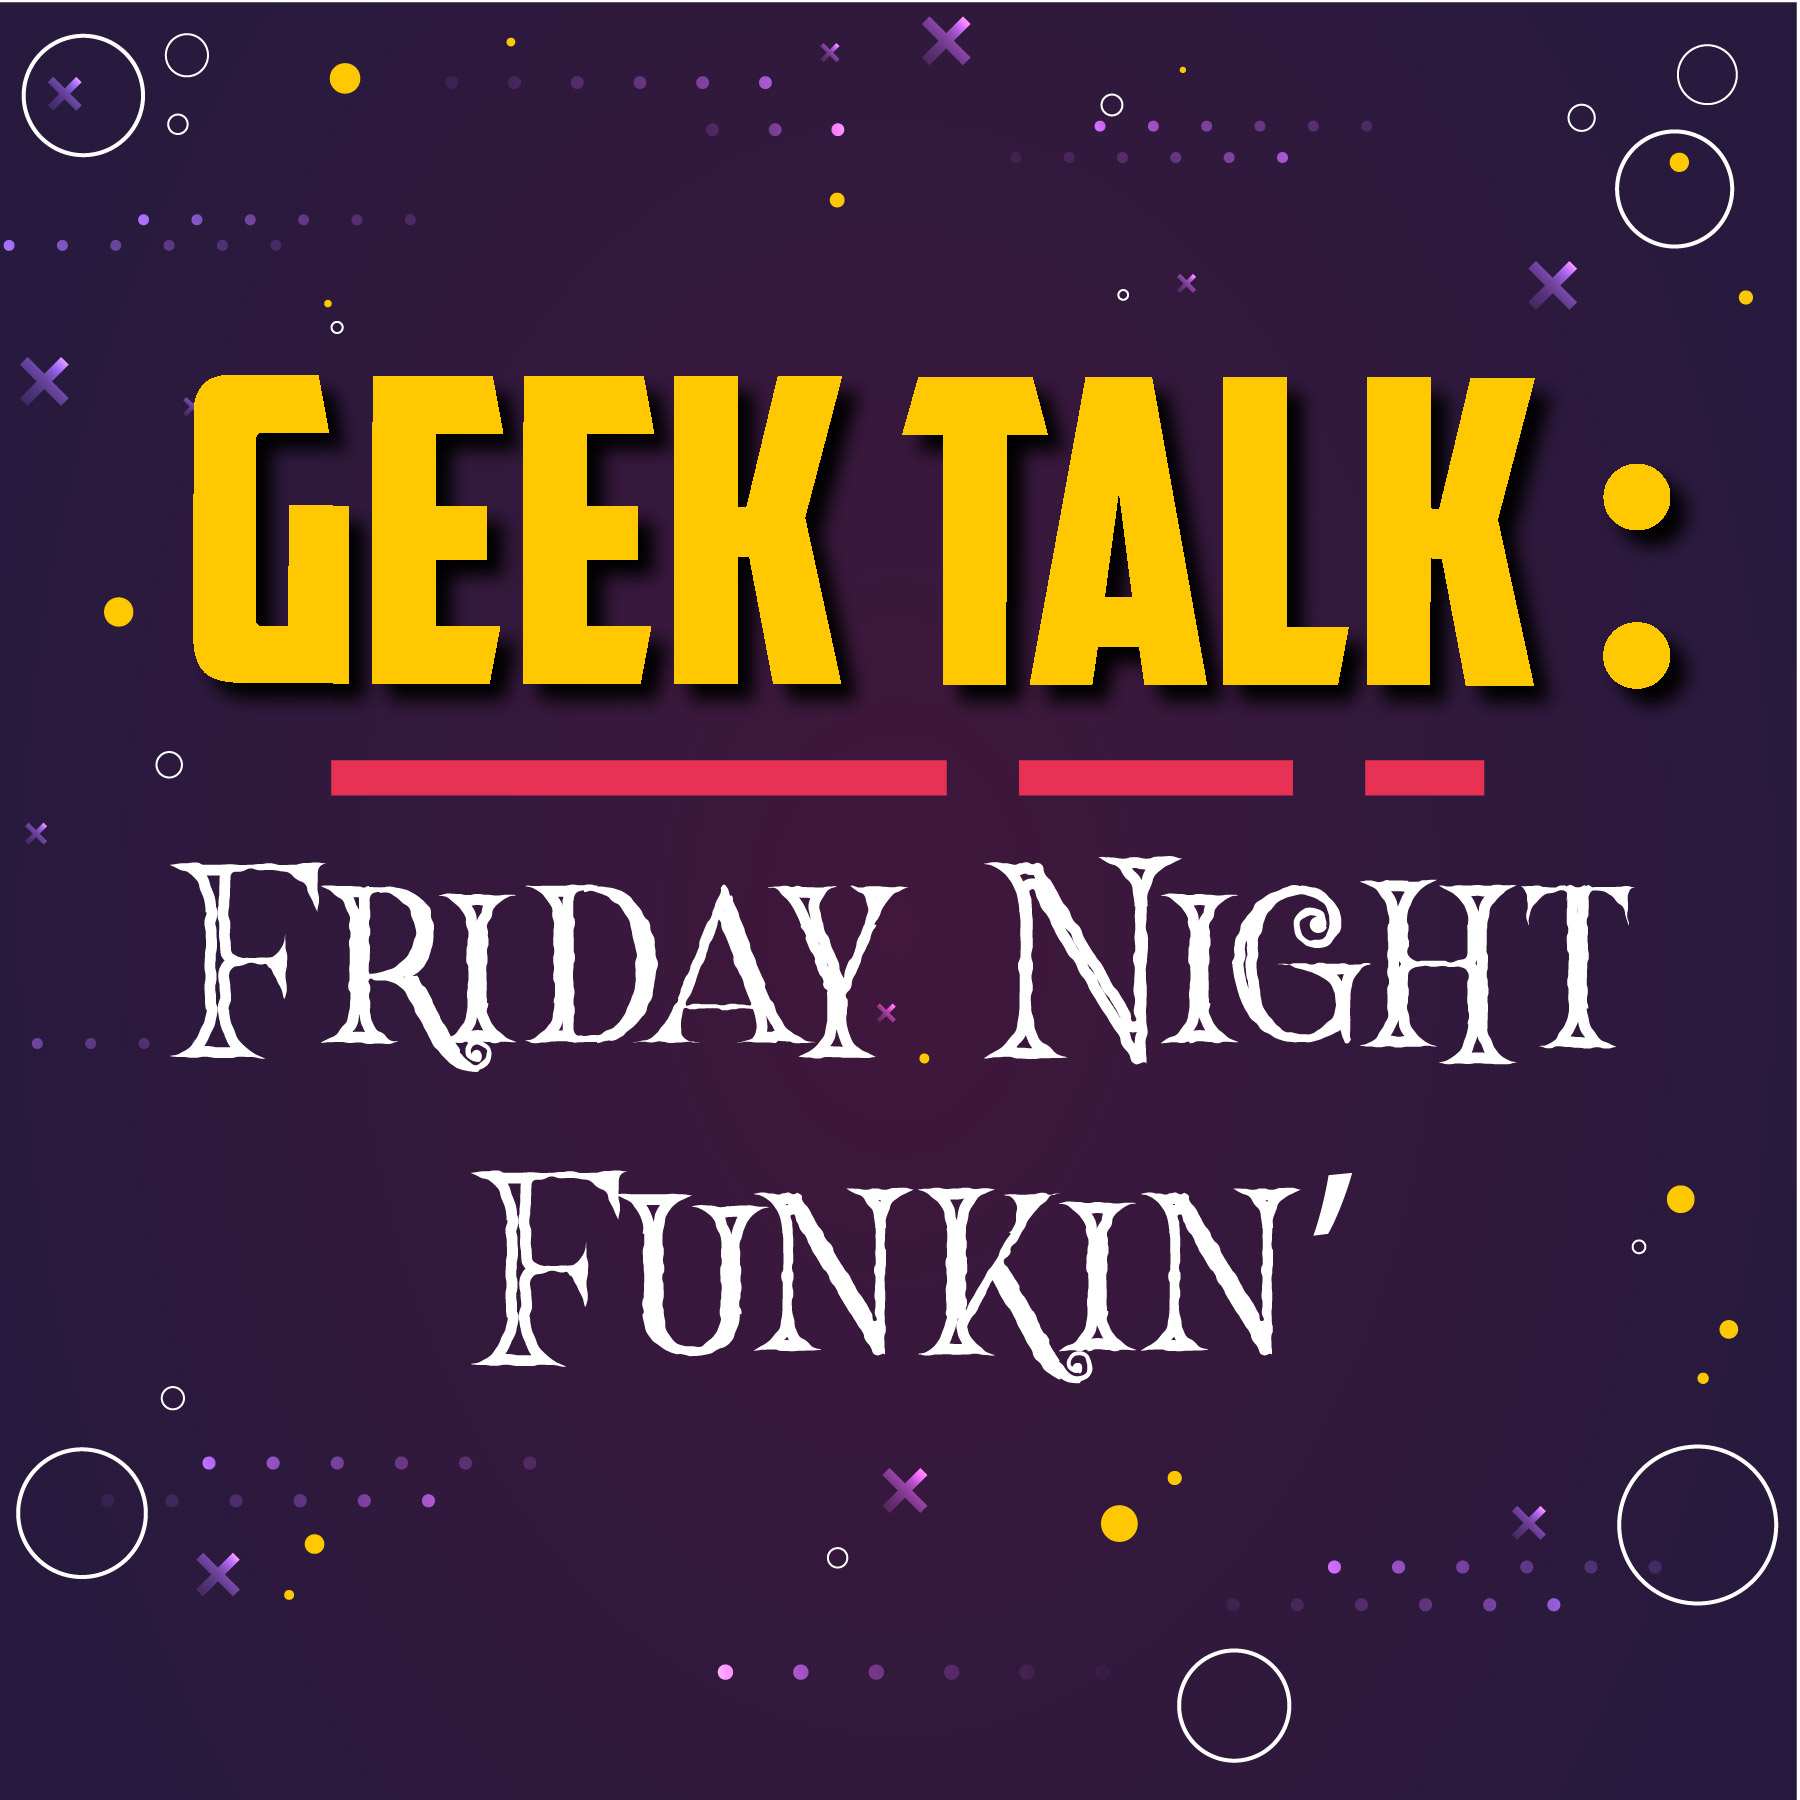 "Geek Talk: Friday Night Funkin" text, on a dark purple background